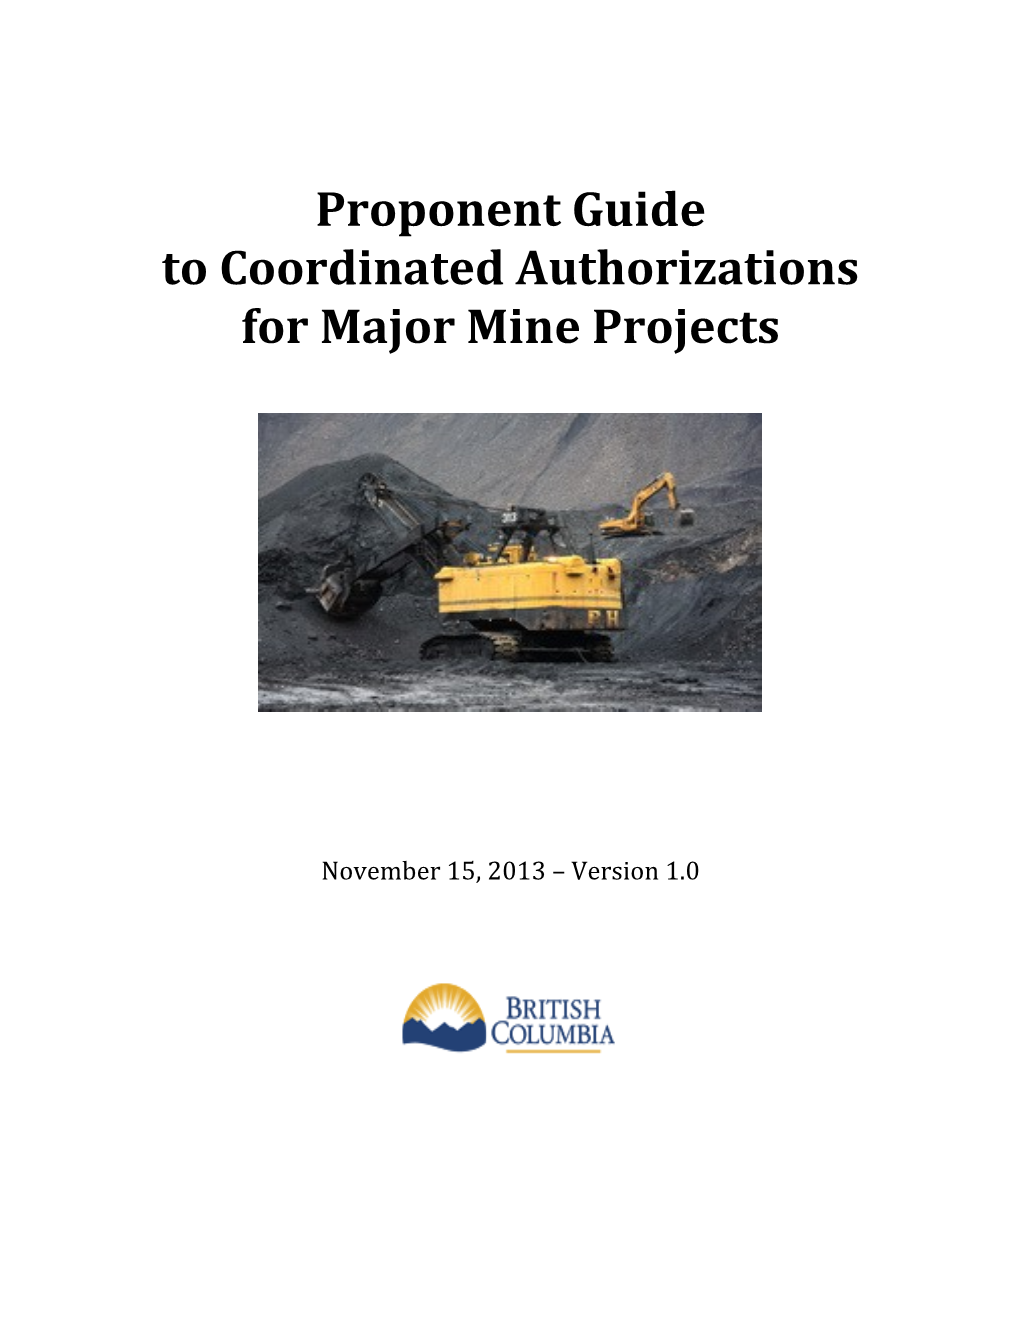 Proponent Guide to Major Mine Authorizationsdocument Change Control